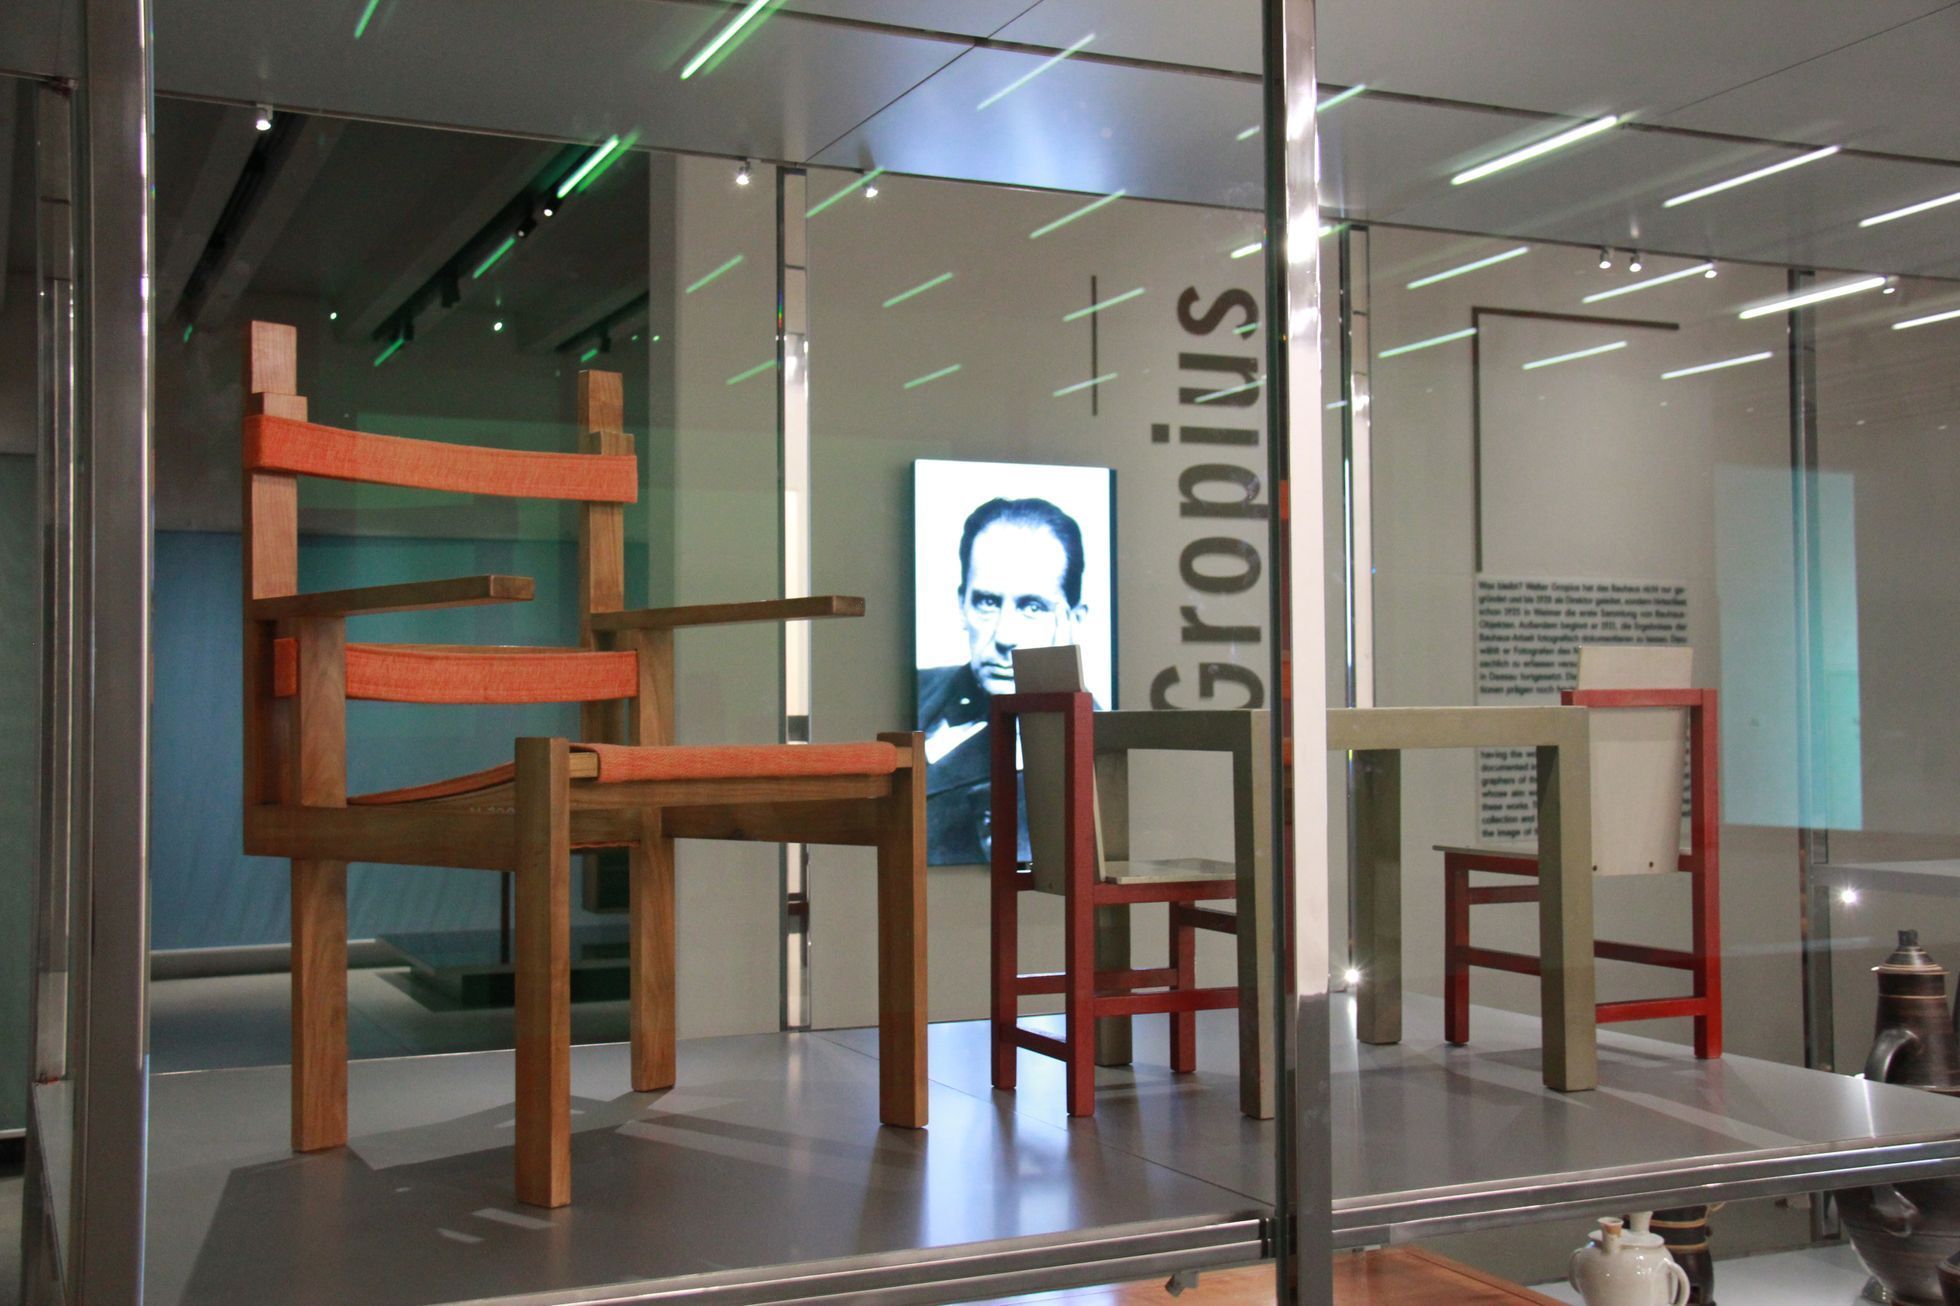 Muzeum Bauhausu